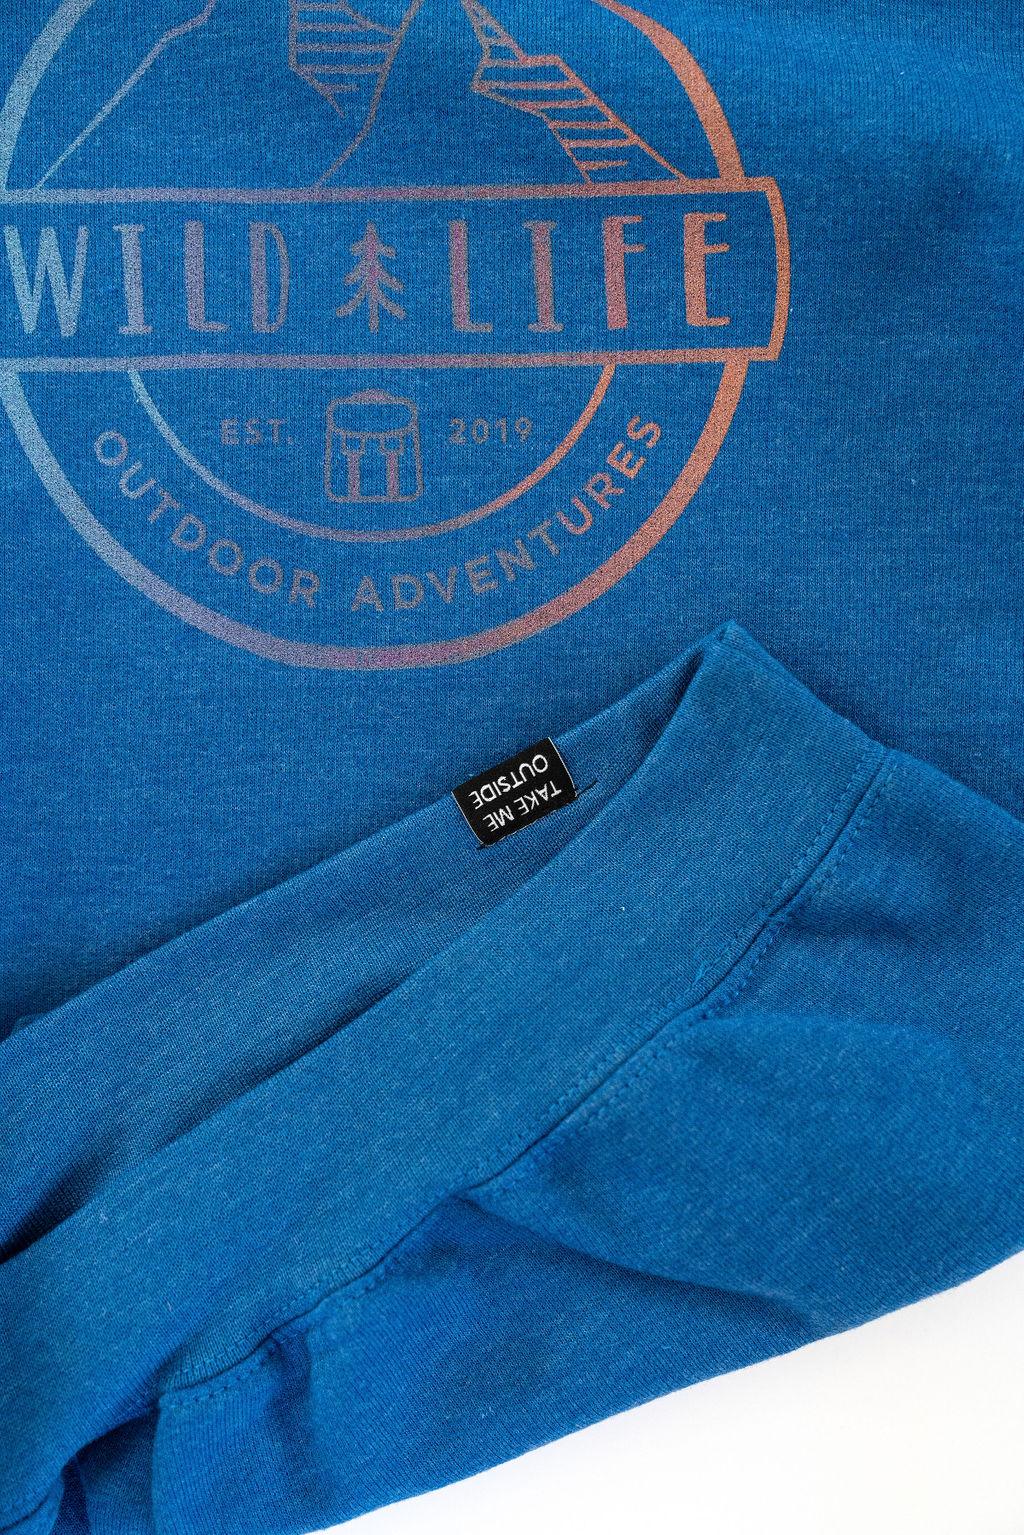 The Wild Life Outdoor Adventures "All Season:" Tri-Colour Crest Logo Hoodie